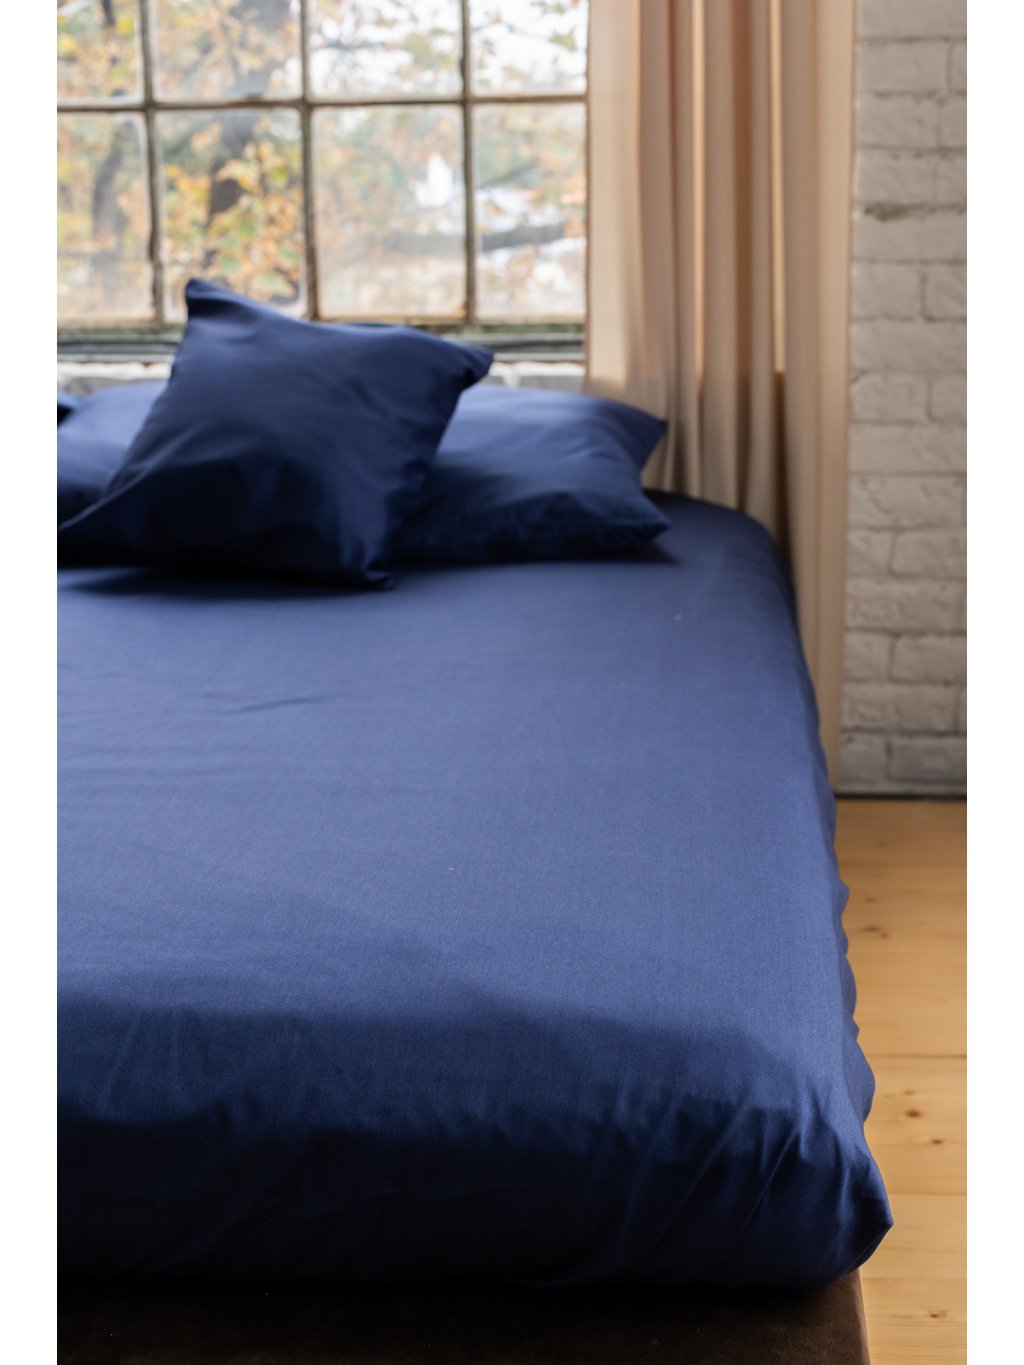 Anti-Dust Mite and Allergen Proof Non Fitted Bed Sheet Nanocotton® - nanoSPACE Blue  Cotton satin nanoSPACE Blue